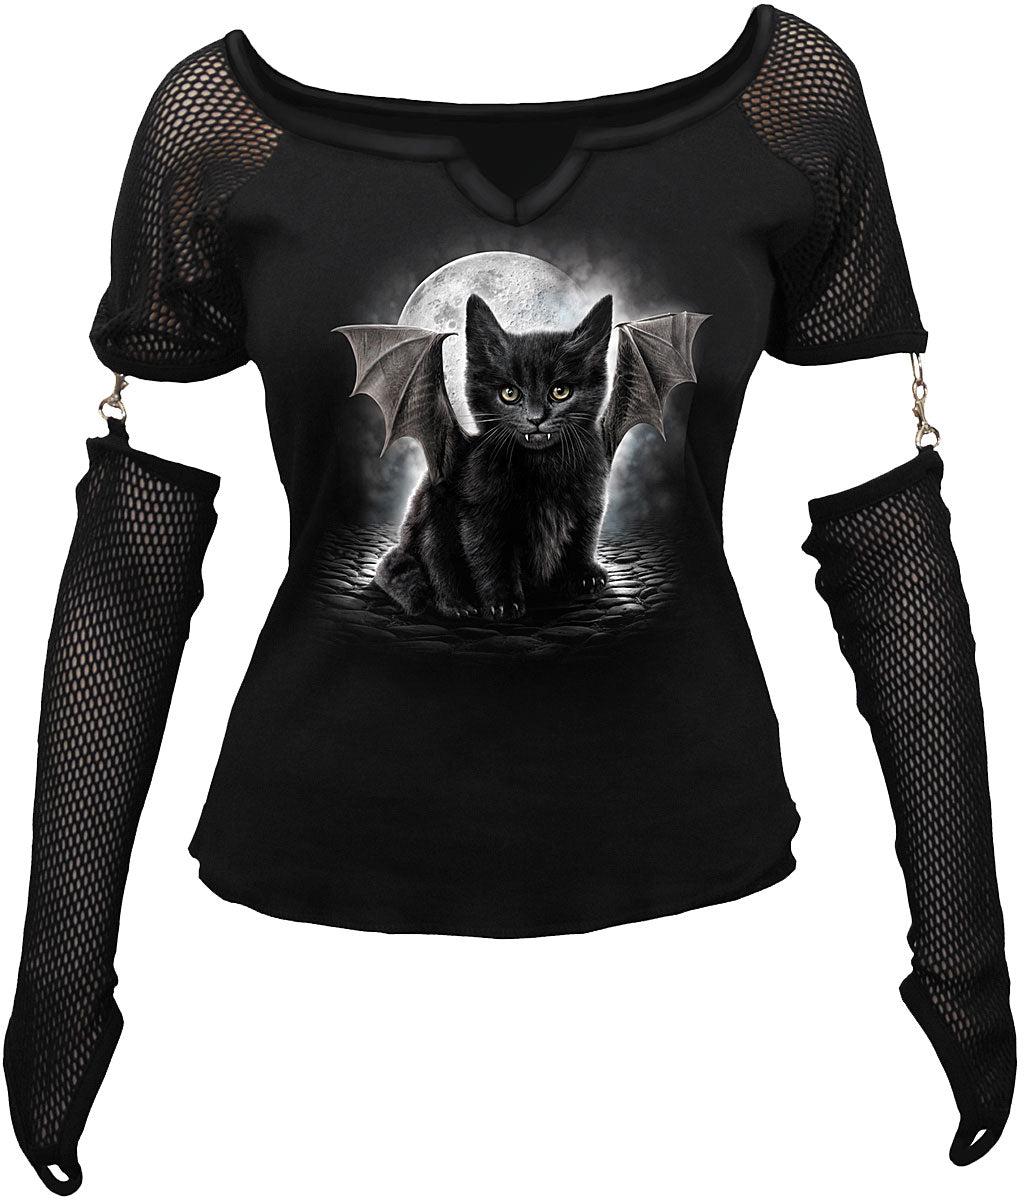 BAT CAT - Mesh Glove Long Sleeve Top